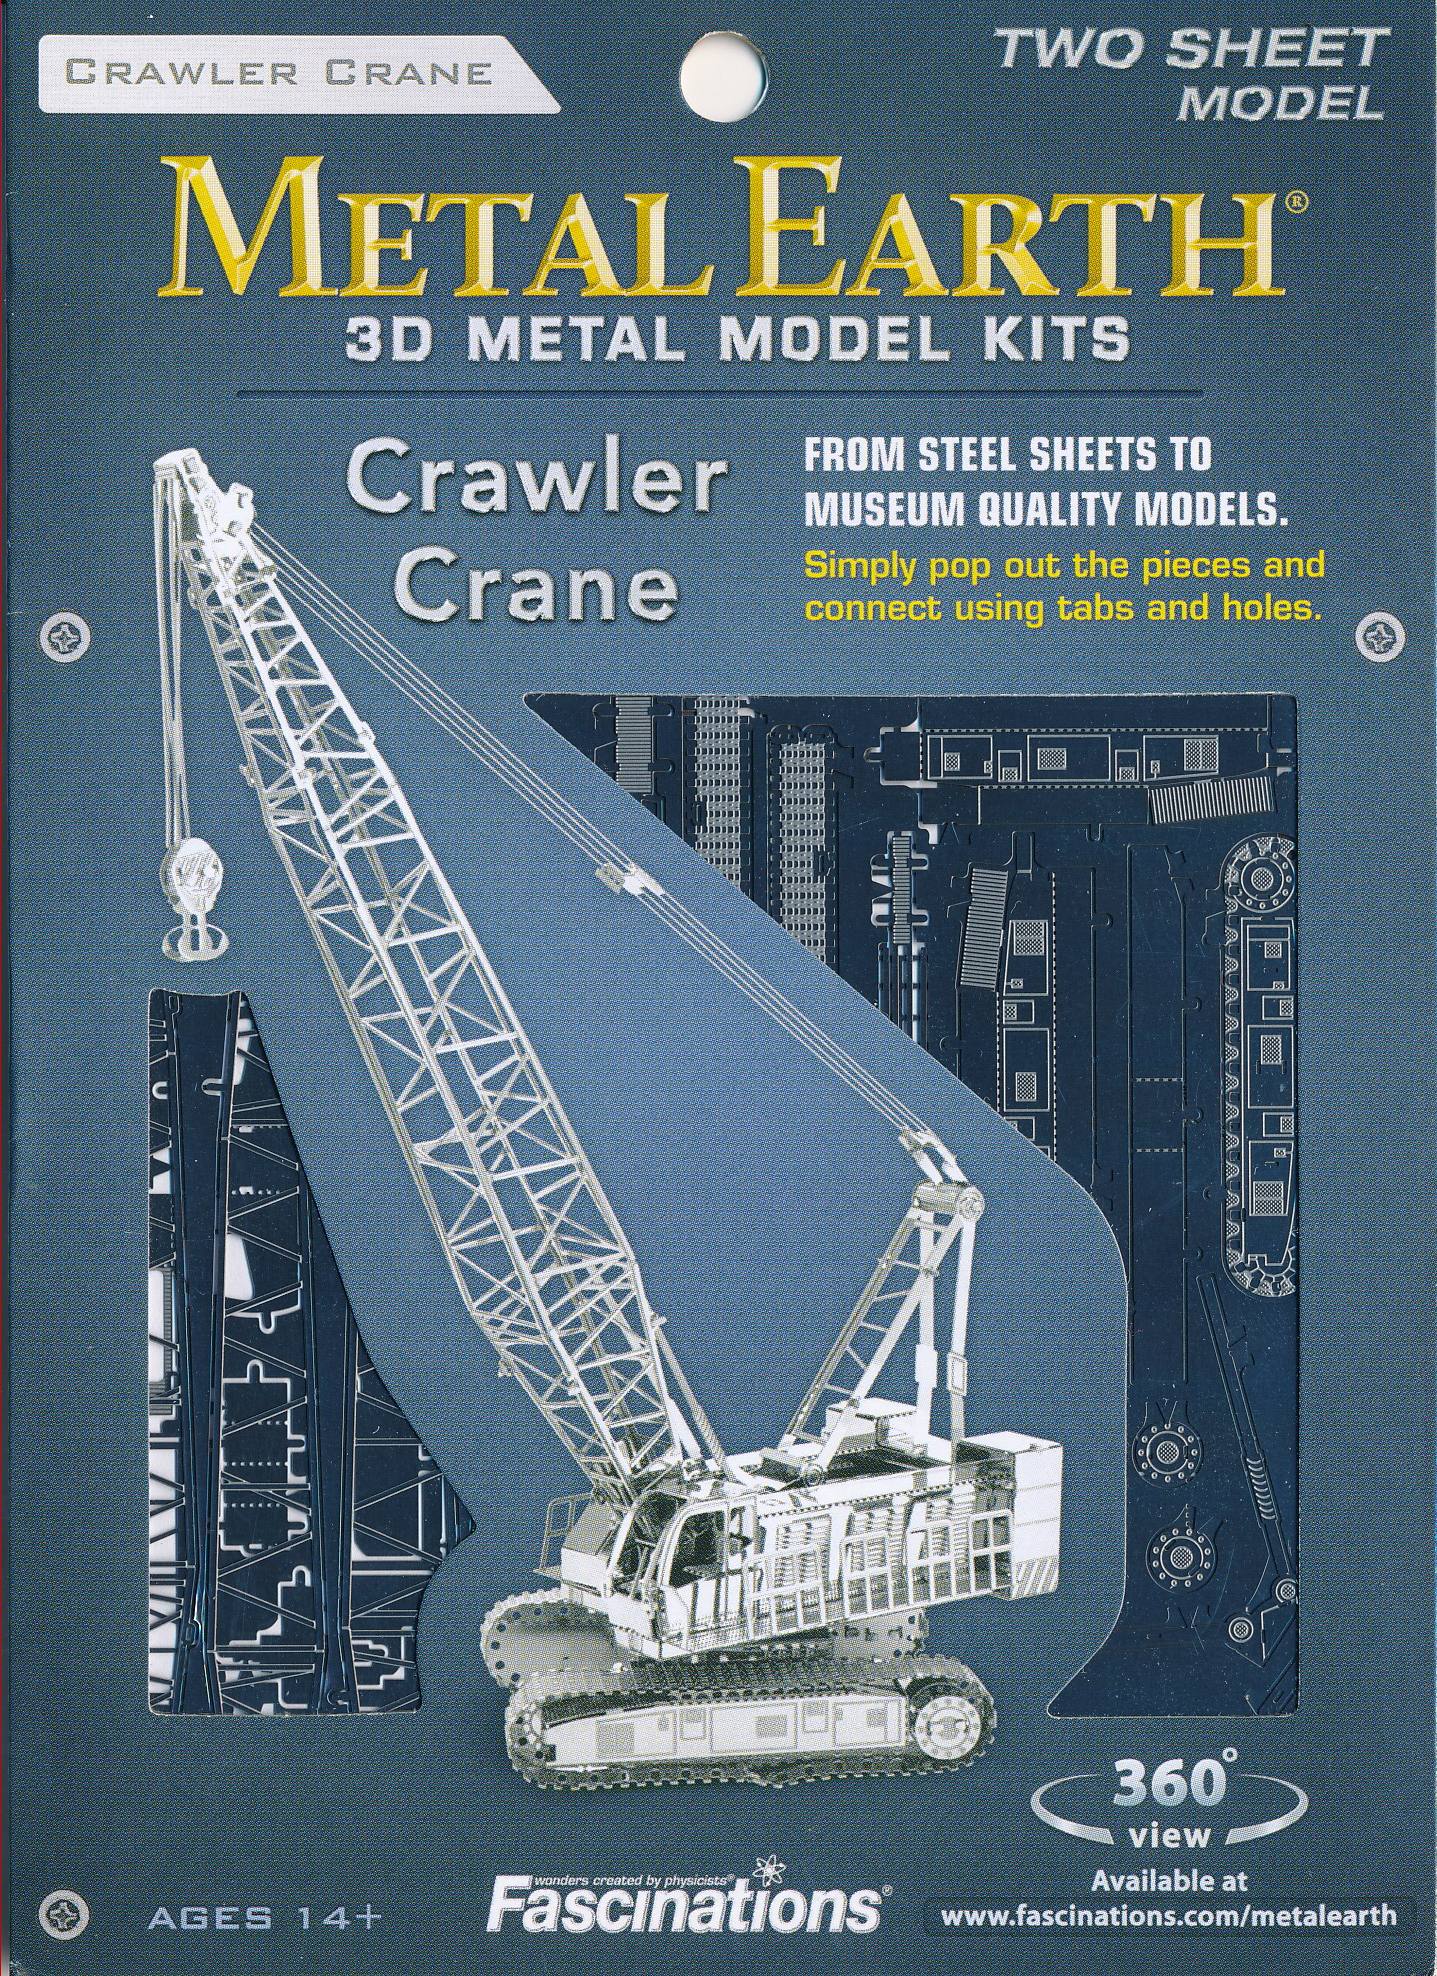 Metal Earth: Crawler Crane